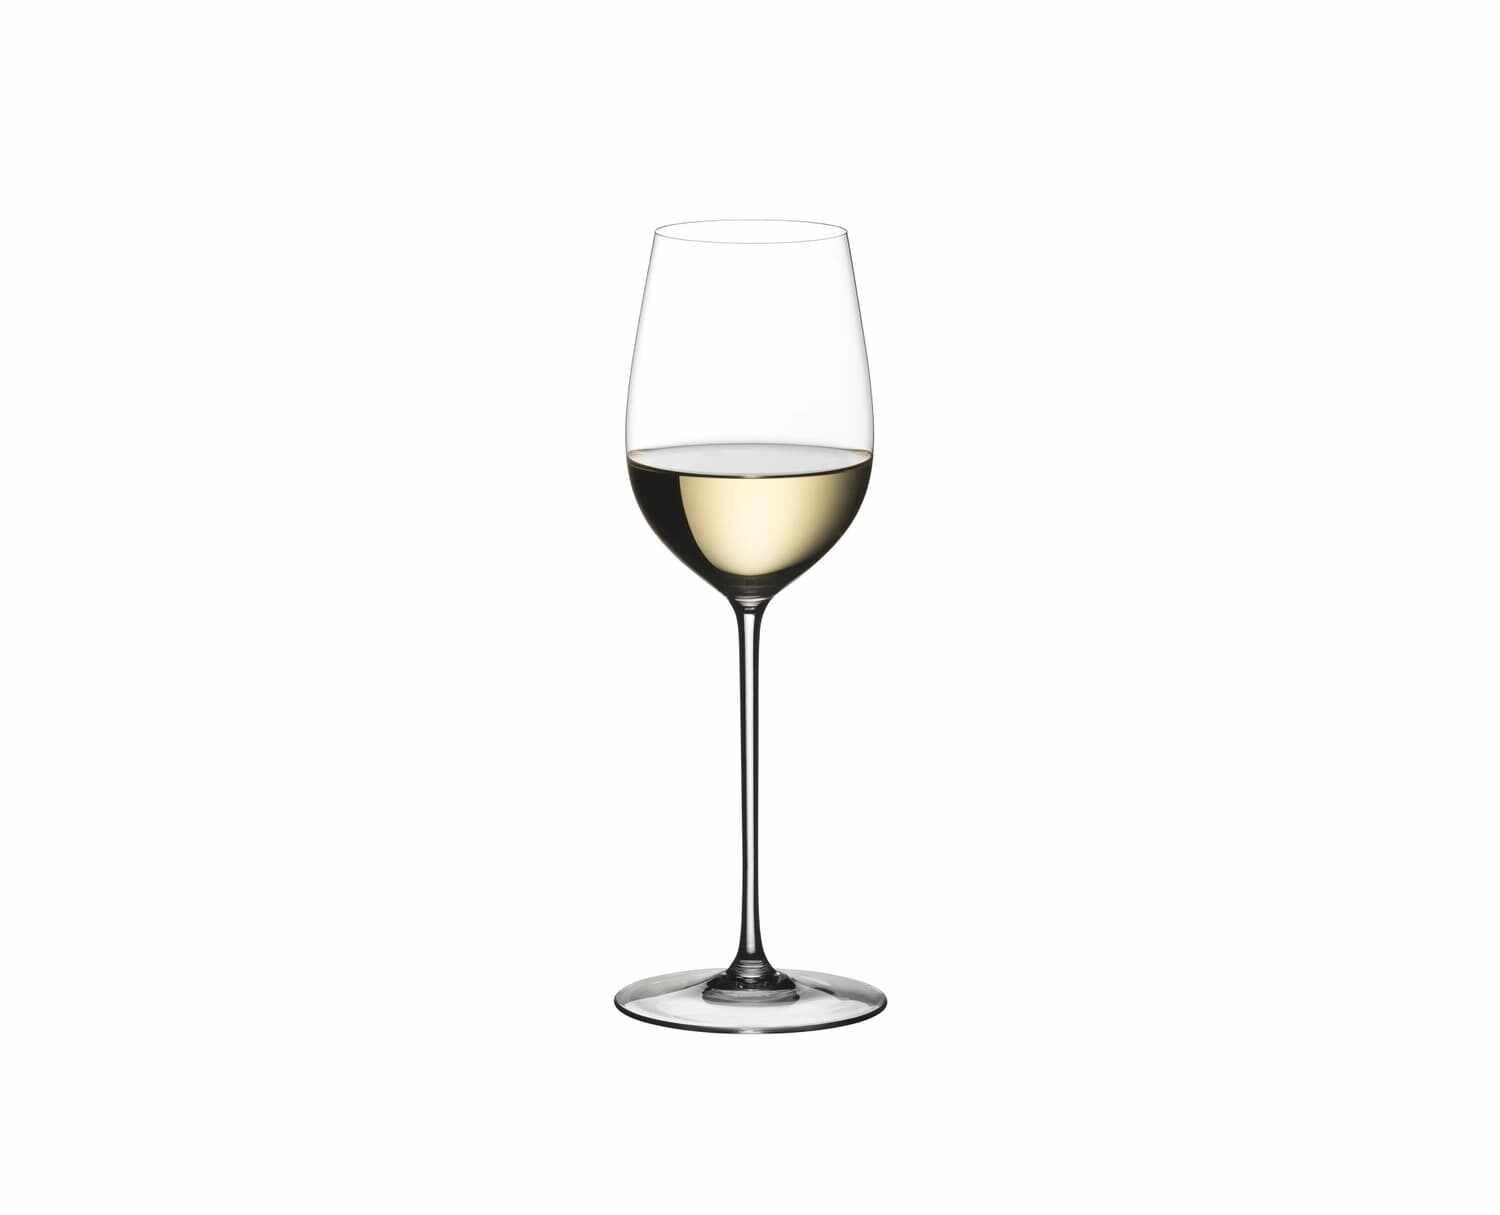 Pahar pentru vin, din cristal Superleggero Viognier / Chardonnay Clear, 370 ml, Riedel